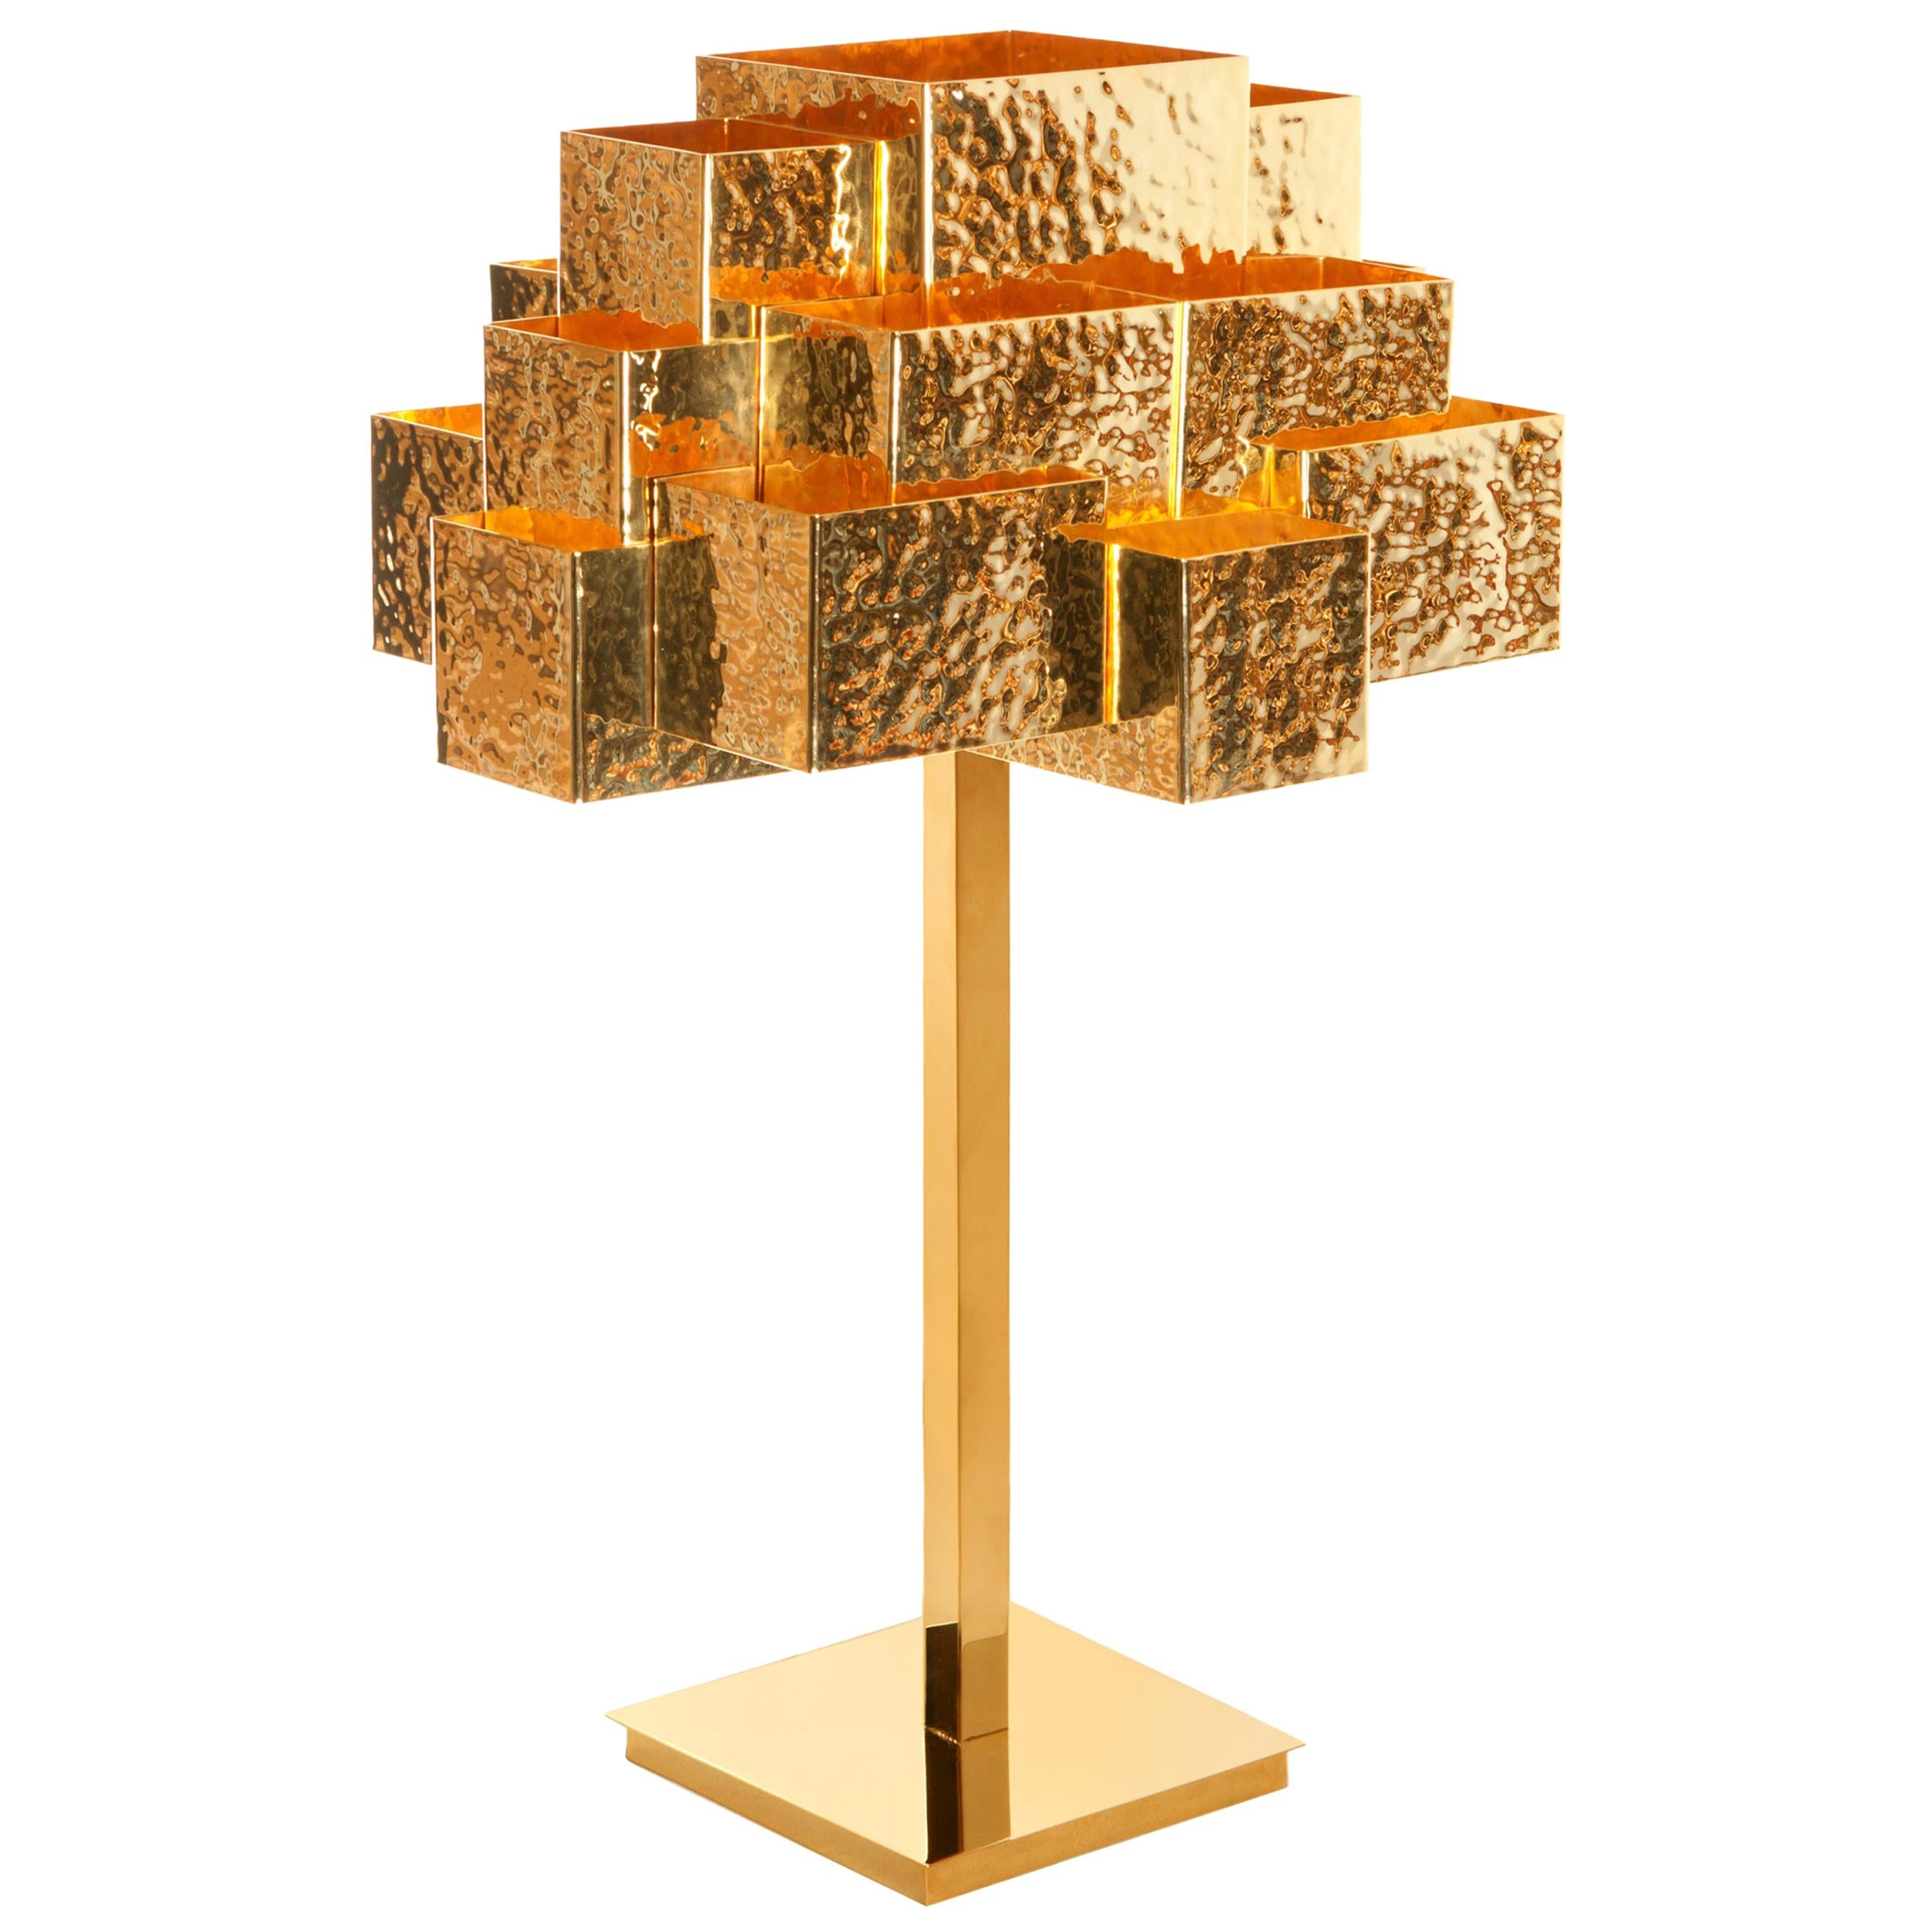 Inspiring Trees Table Lamp, Golden Brass, InsidherLand by Joana Santos Barbosa